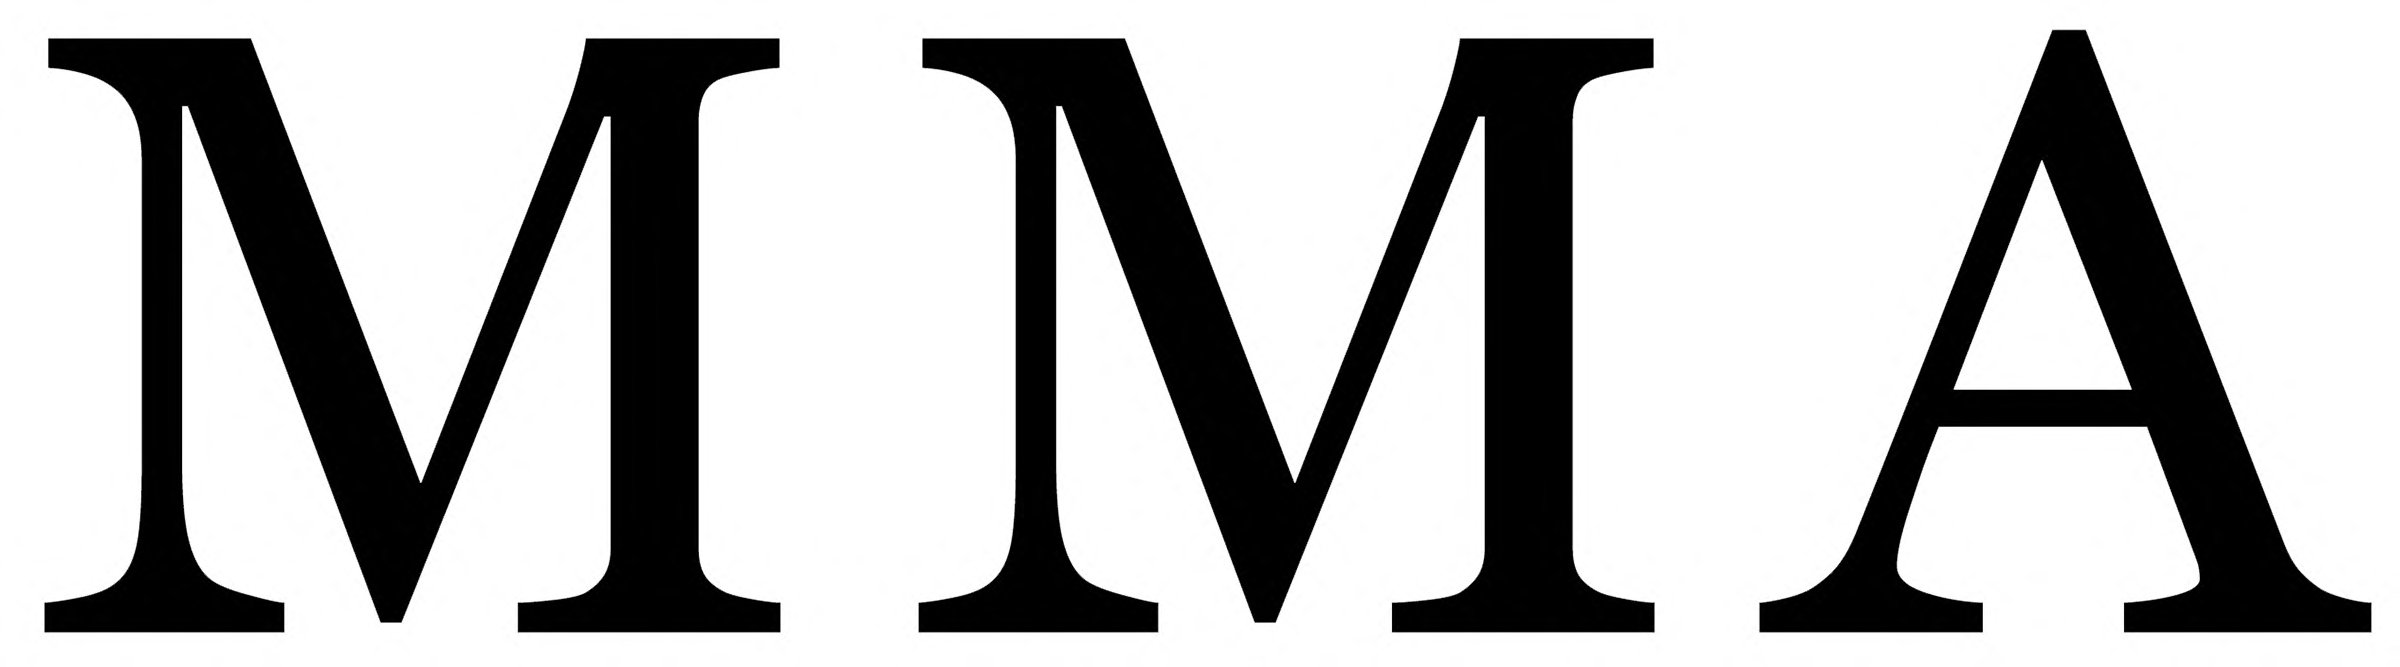 Morehouse Macdonald Logo.jpg